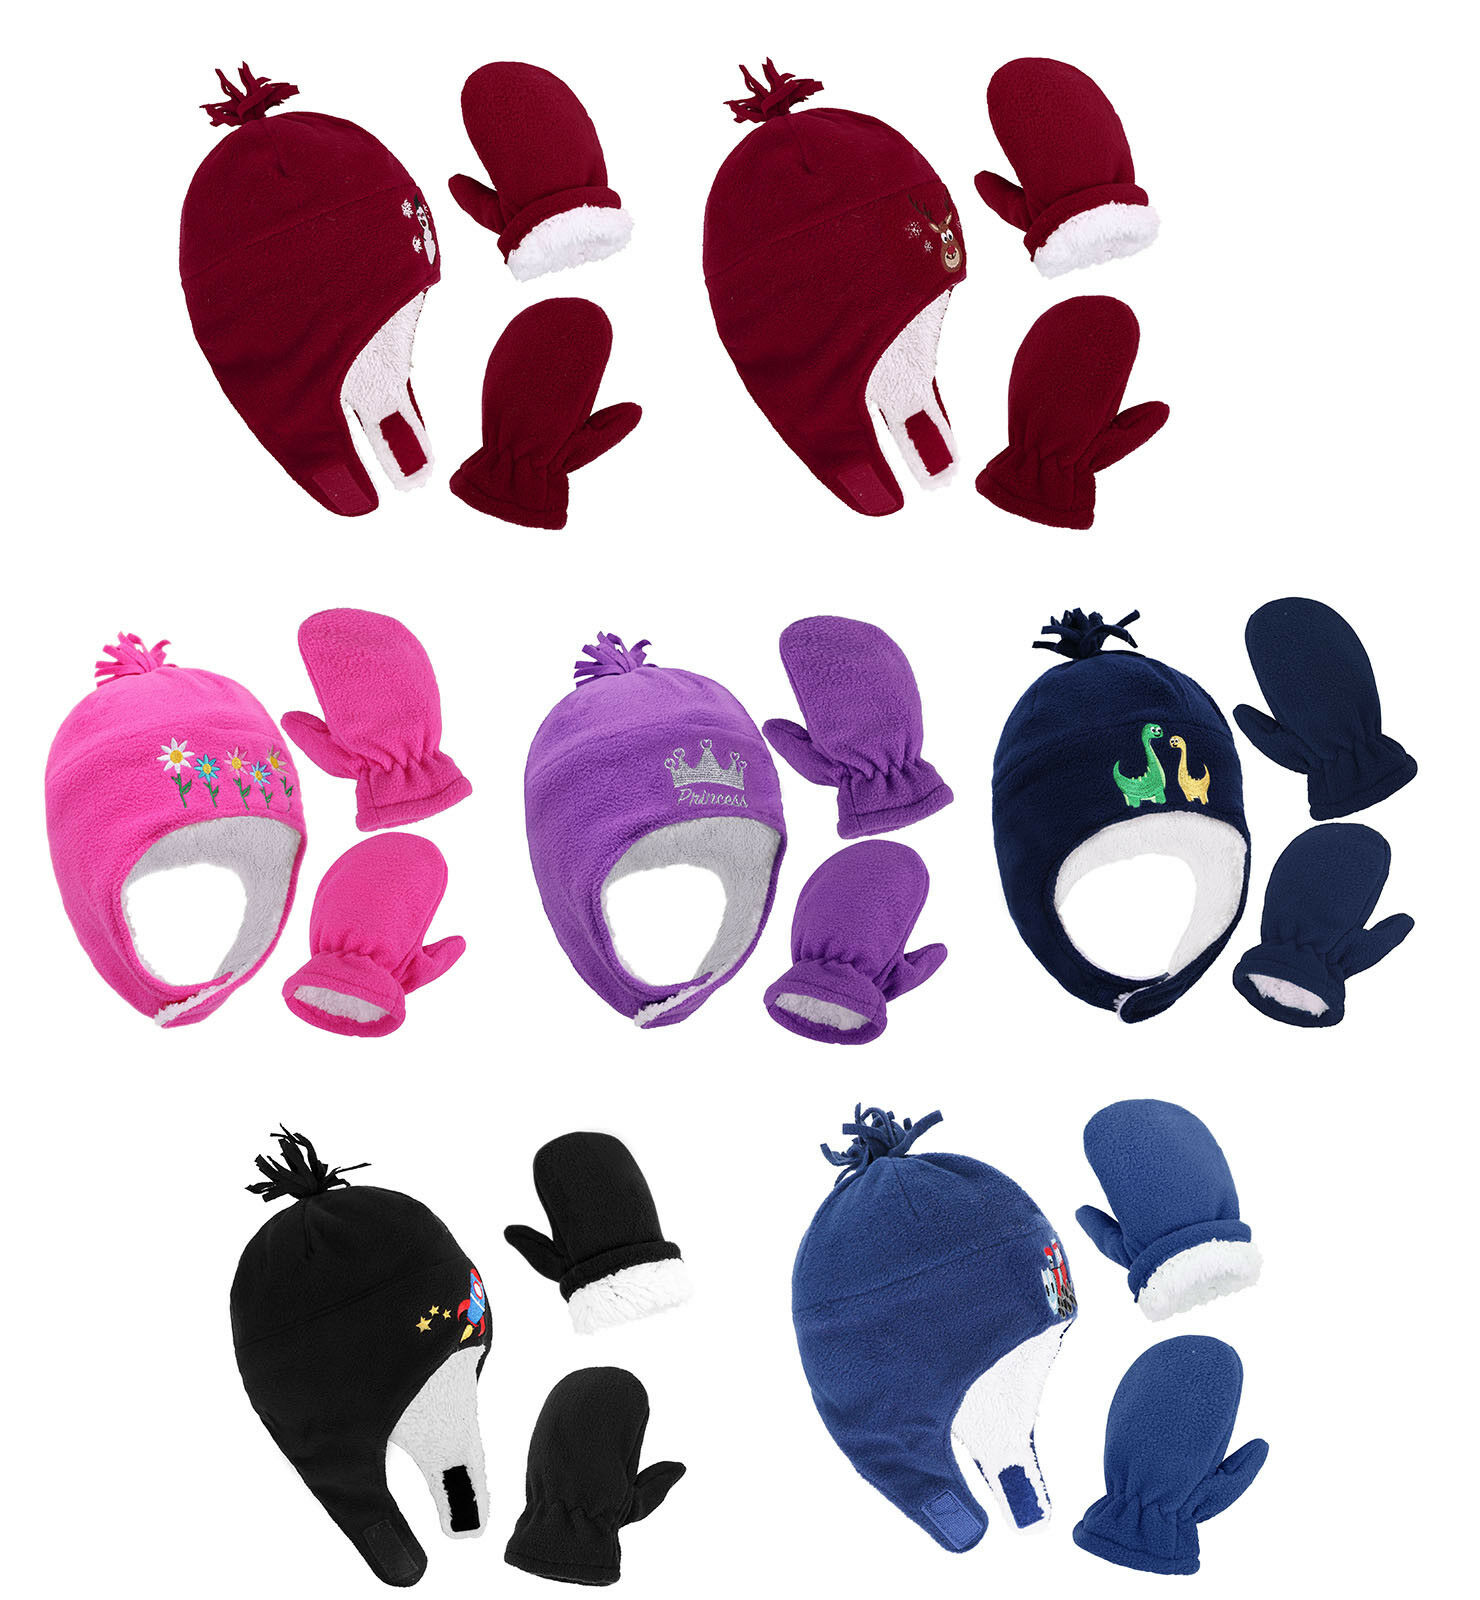 Baby Toddler Kids Winter Warm Fleece Earflap Beanie Gloves Mittens Set